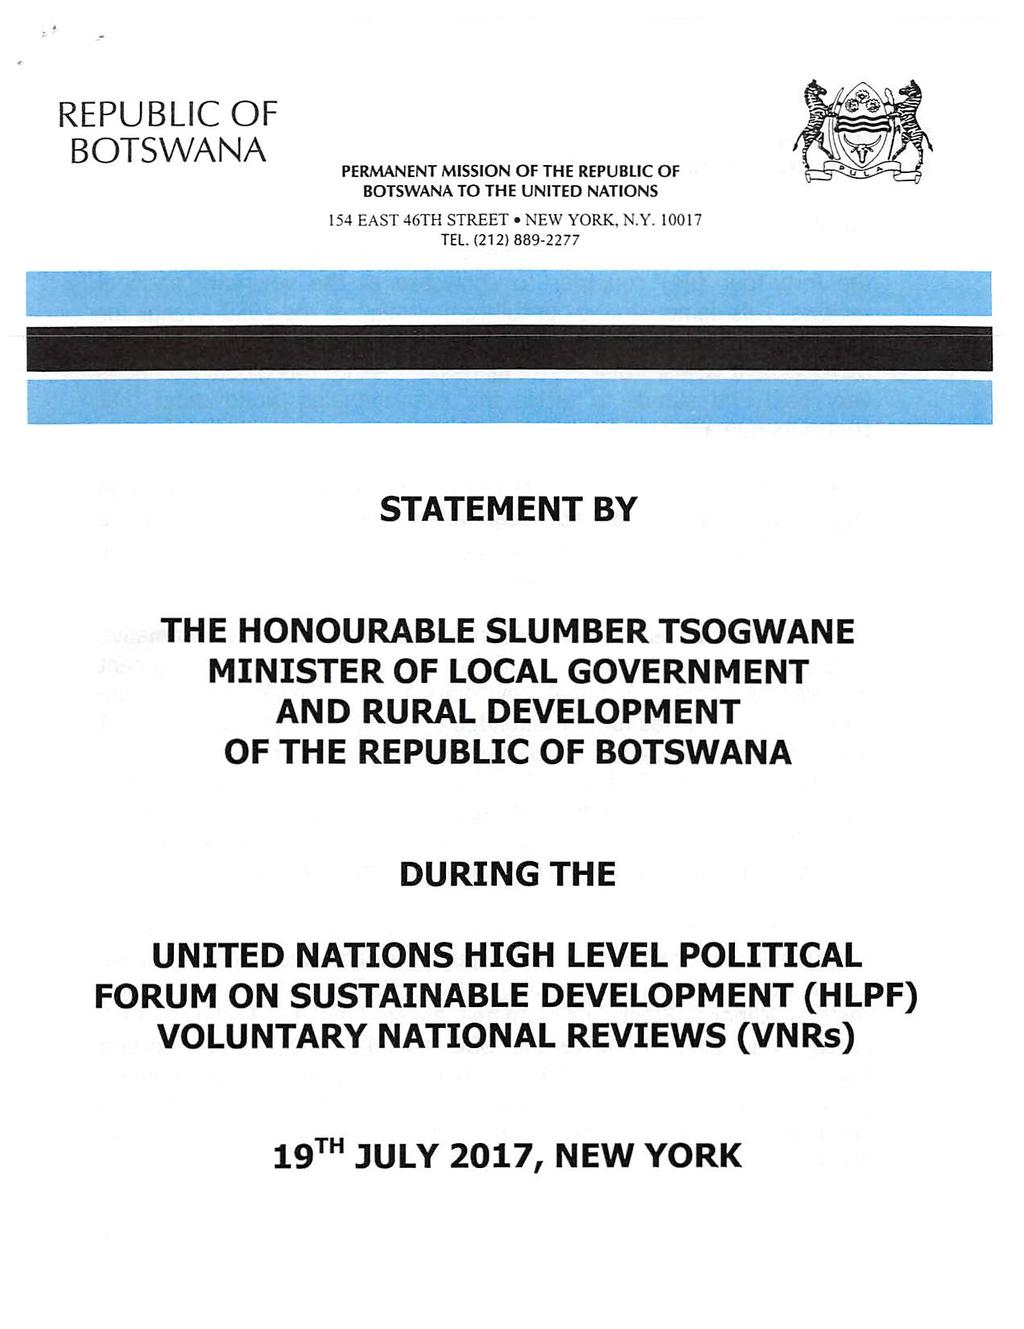 REPUBLIC OF BOTSWANA PERMANENT MISSION OF THE REPUBLIC OF BOTSWANA TO THE UNITED NATIONS 154 EAST 46TH STREET NEW YORK, N.Y. 10017 TEL.